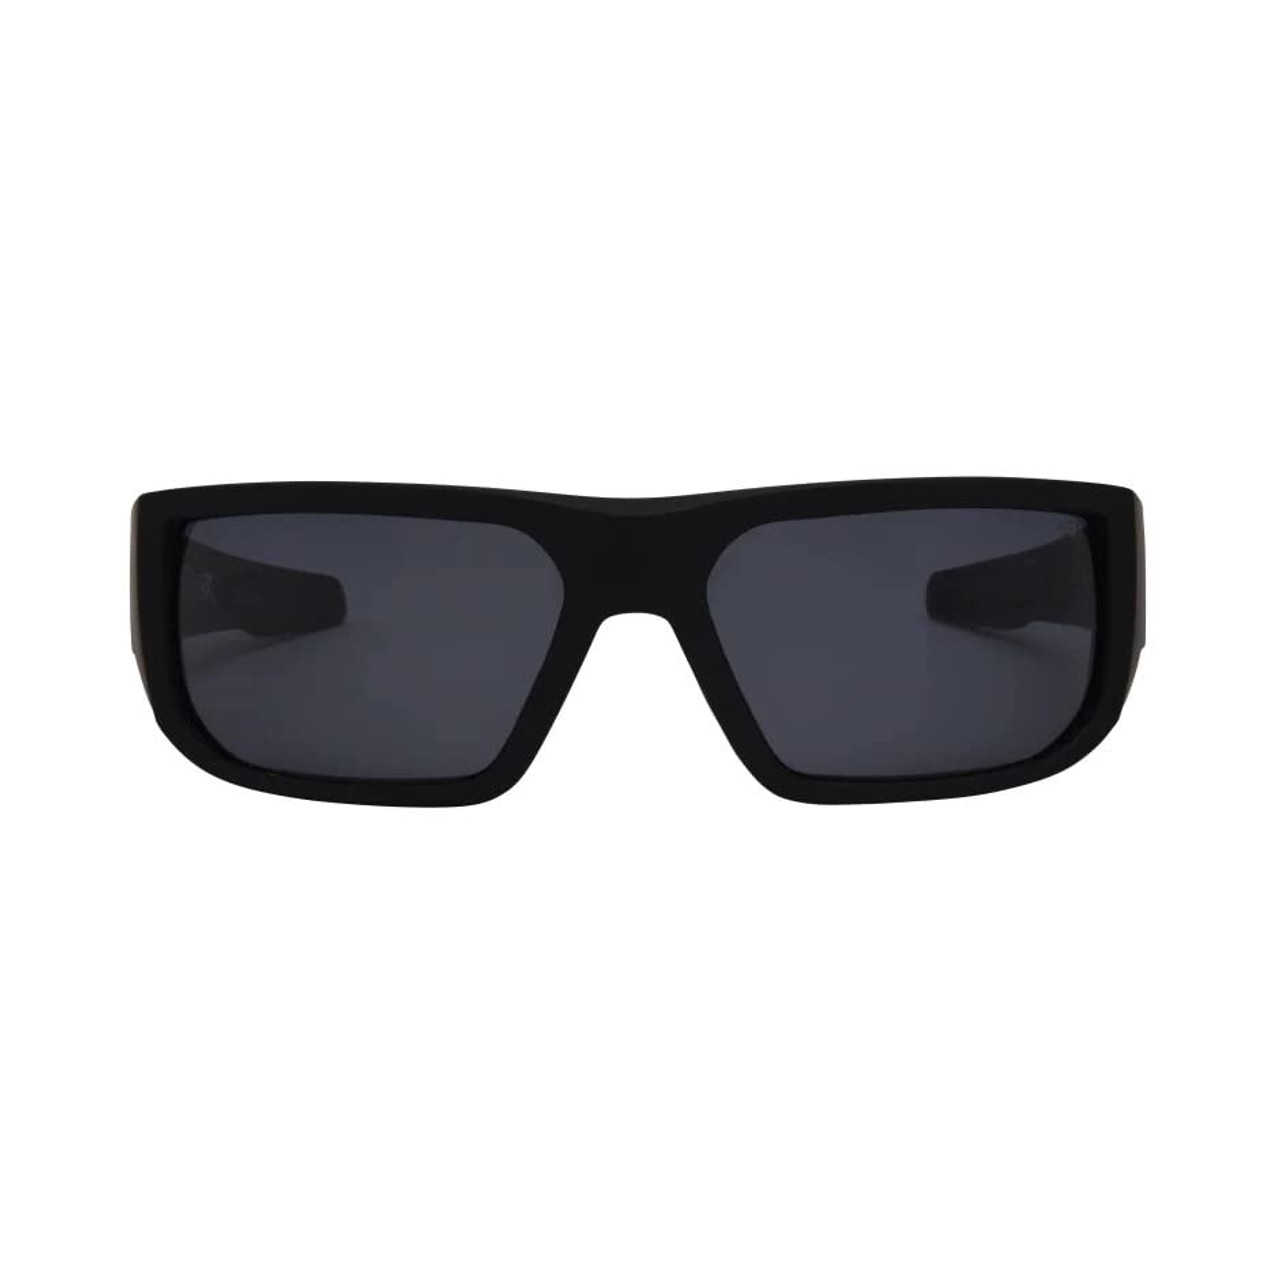 I-SEA Men's Sunglasses - Greyson Fletcher - Catalyst